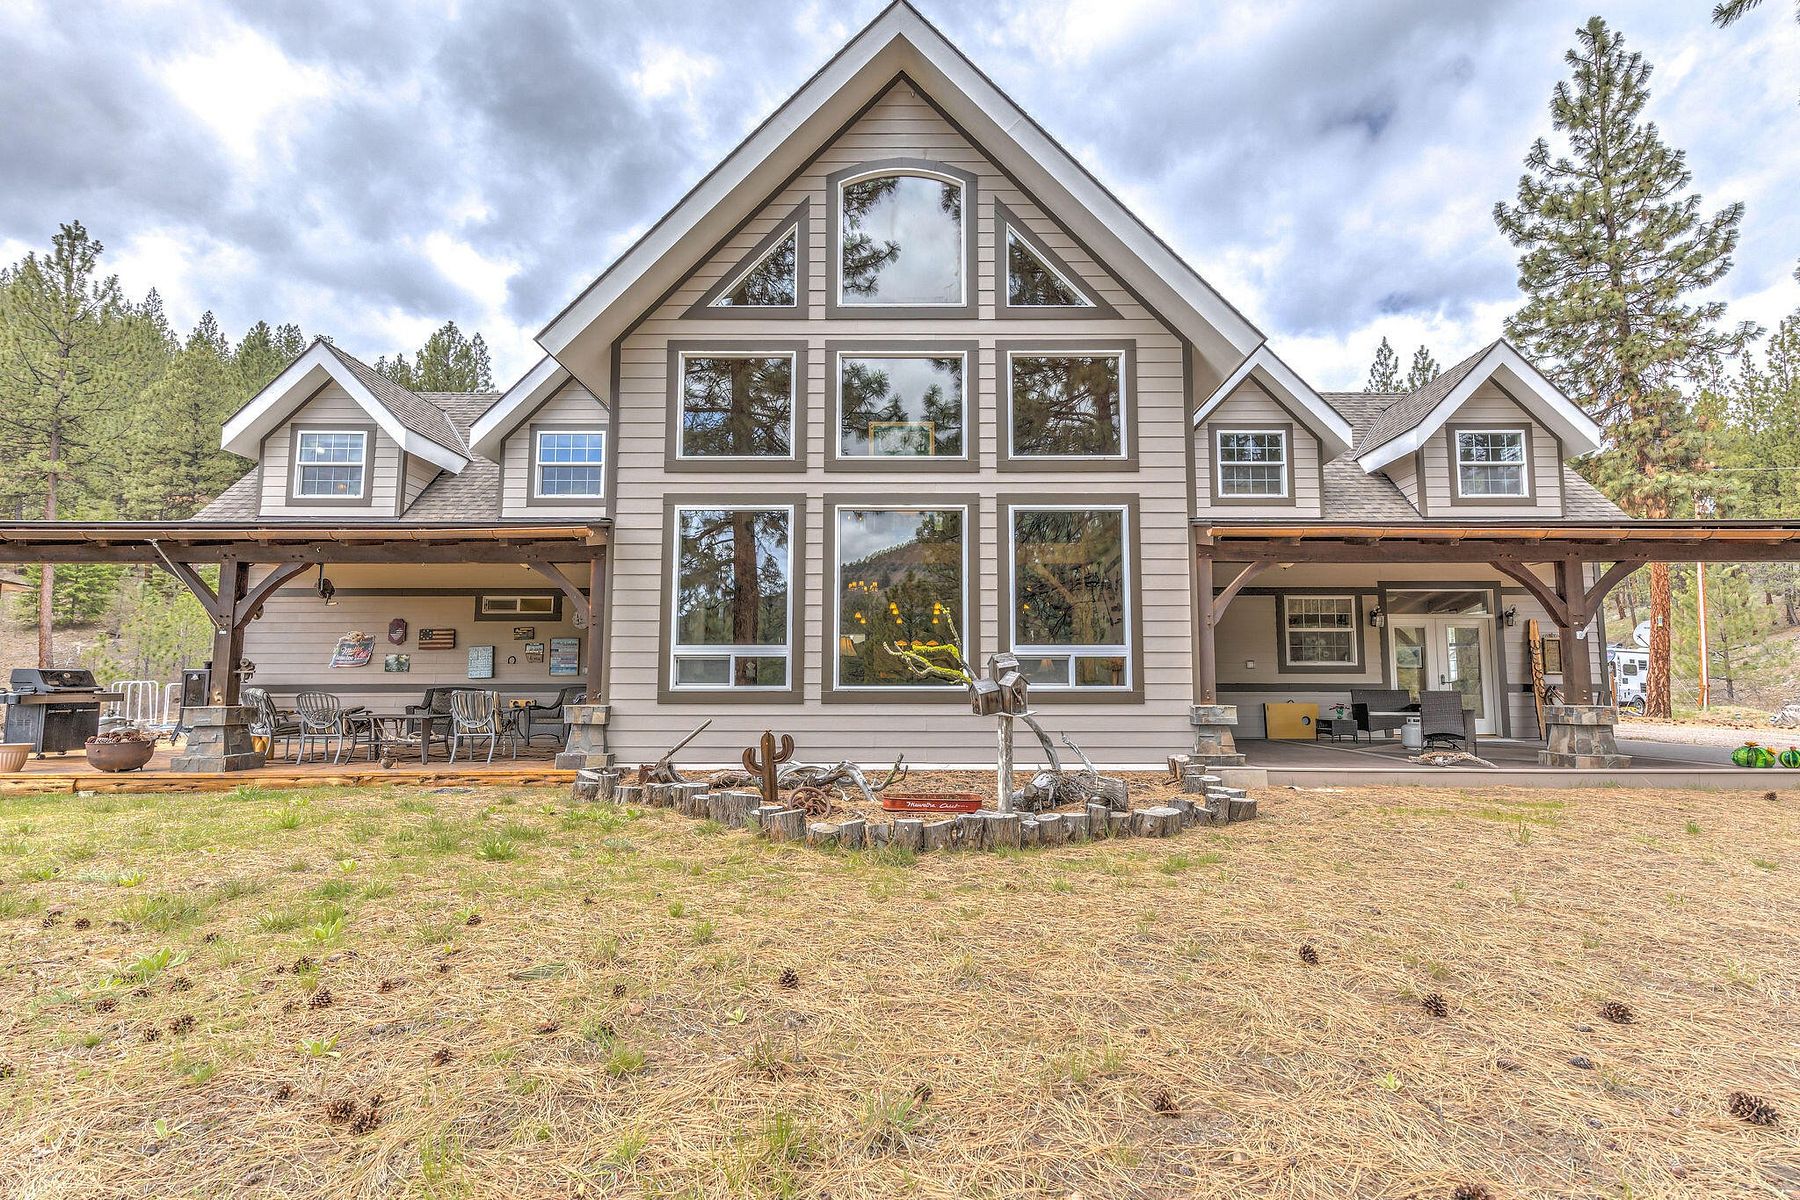 160 Acres of Land & Home Prineville, Oregon, OR